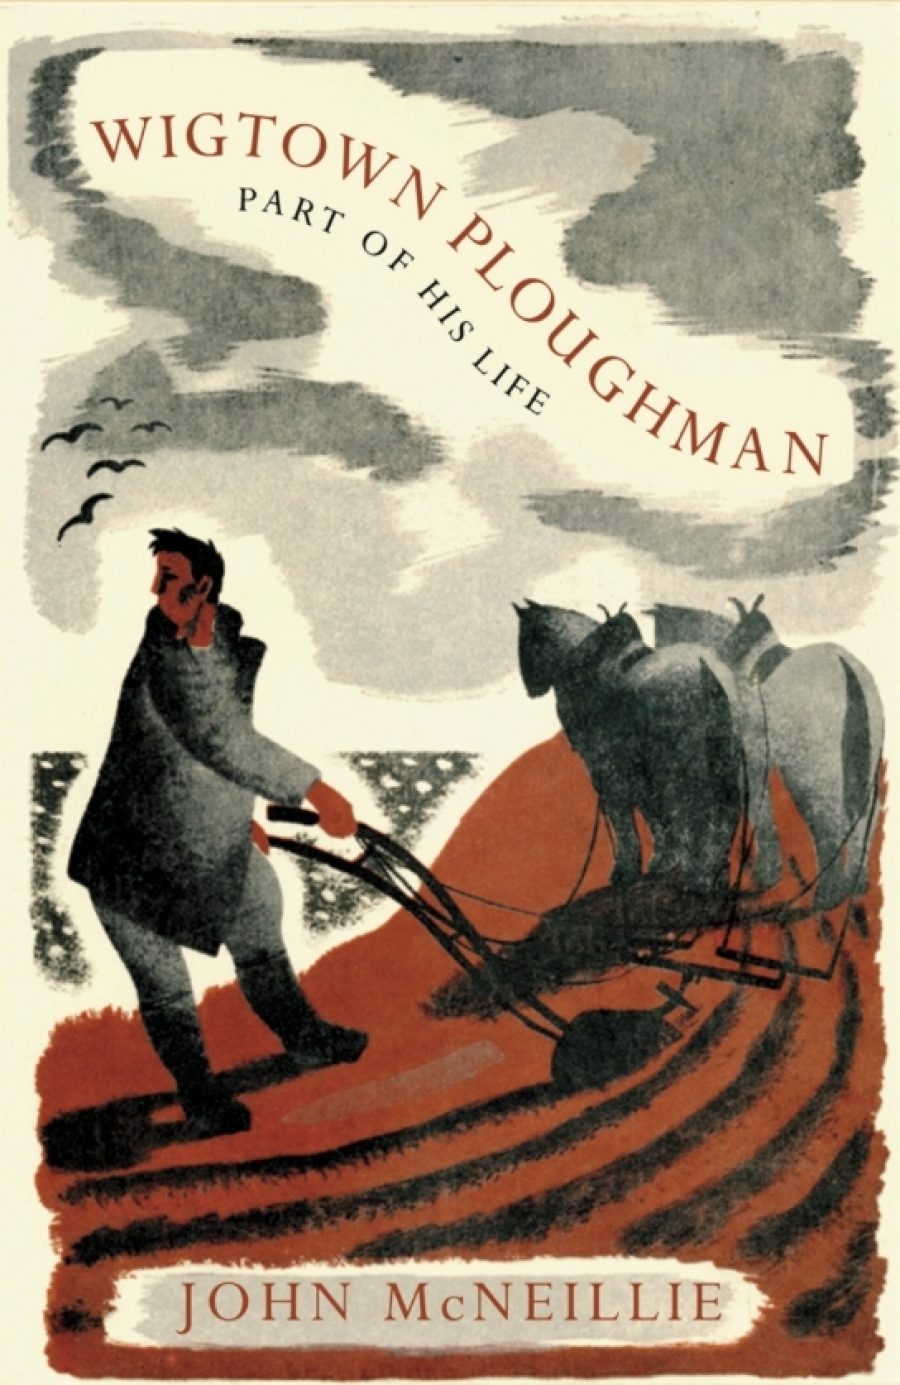 Wigtown Ploughman, John McNeillie cover